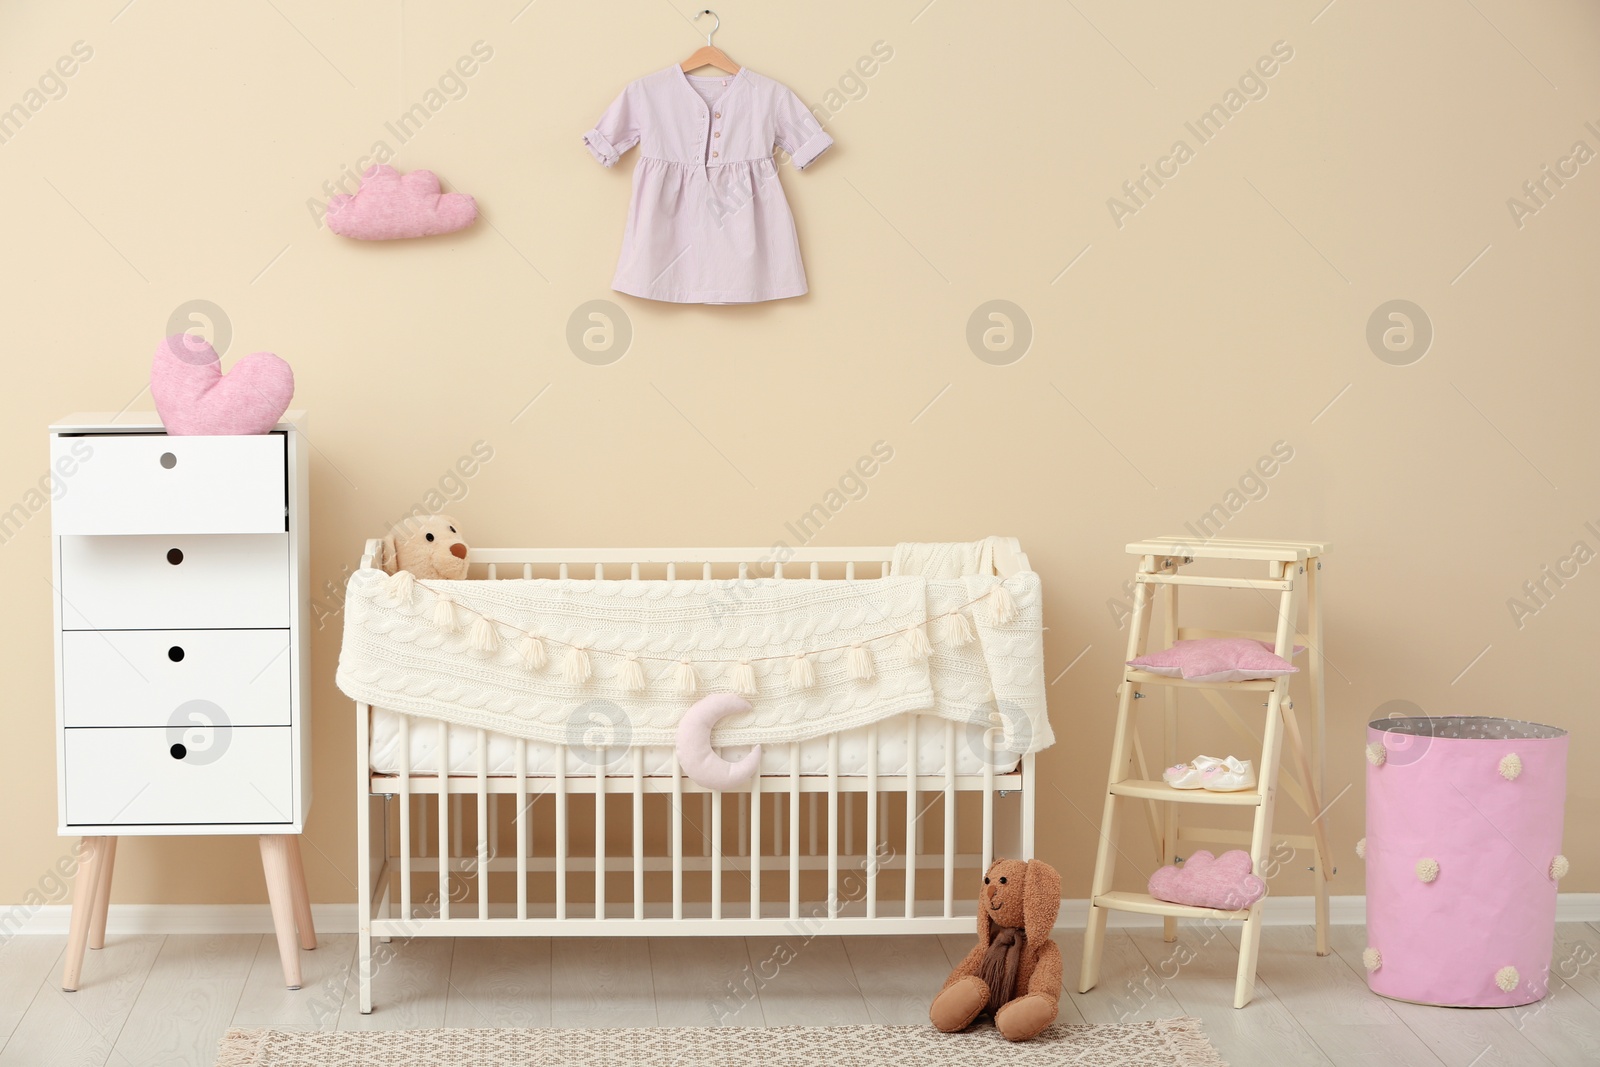 Photo of Stylish baby room interior with comfortable crib